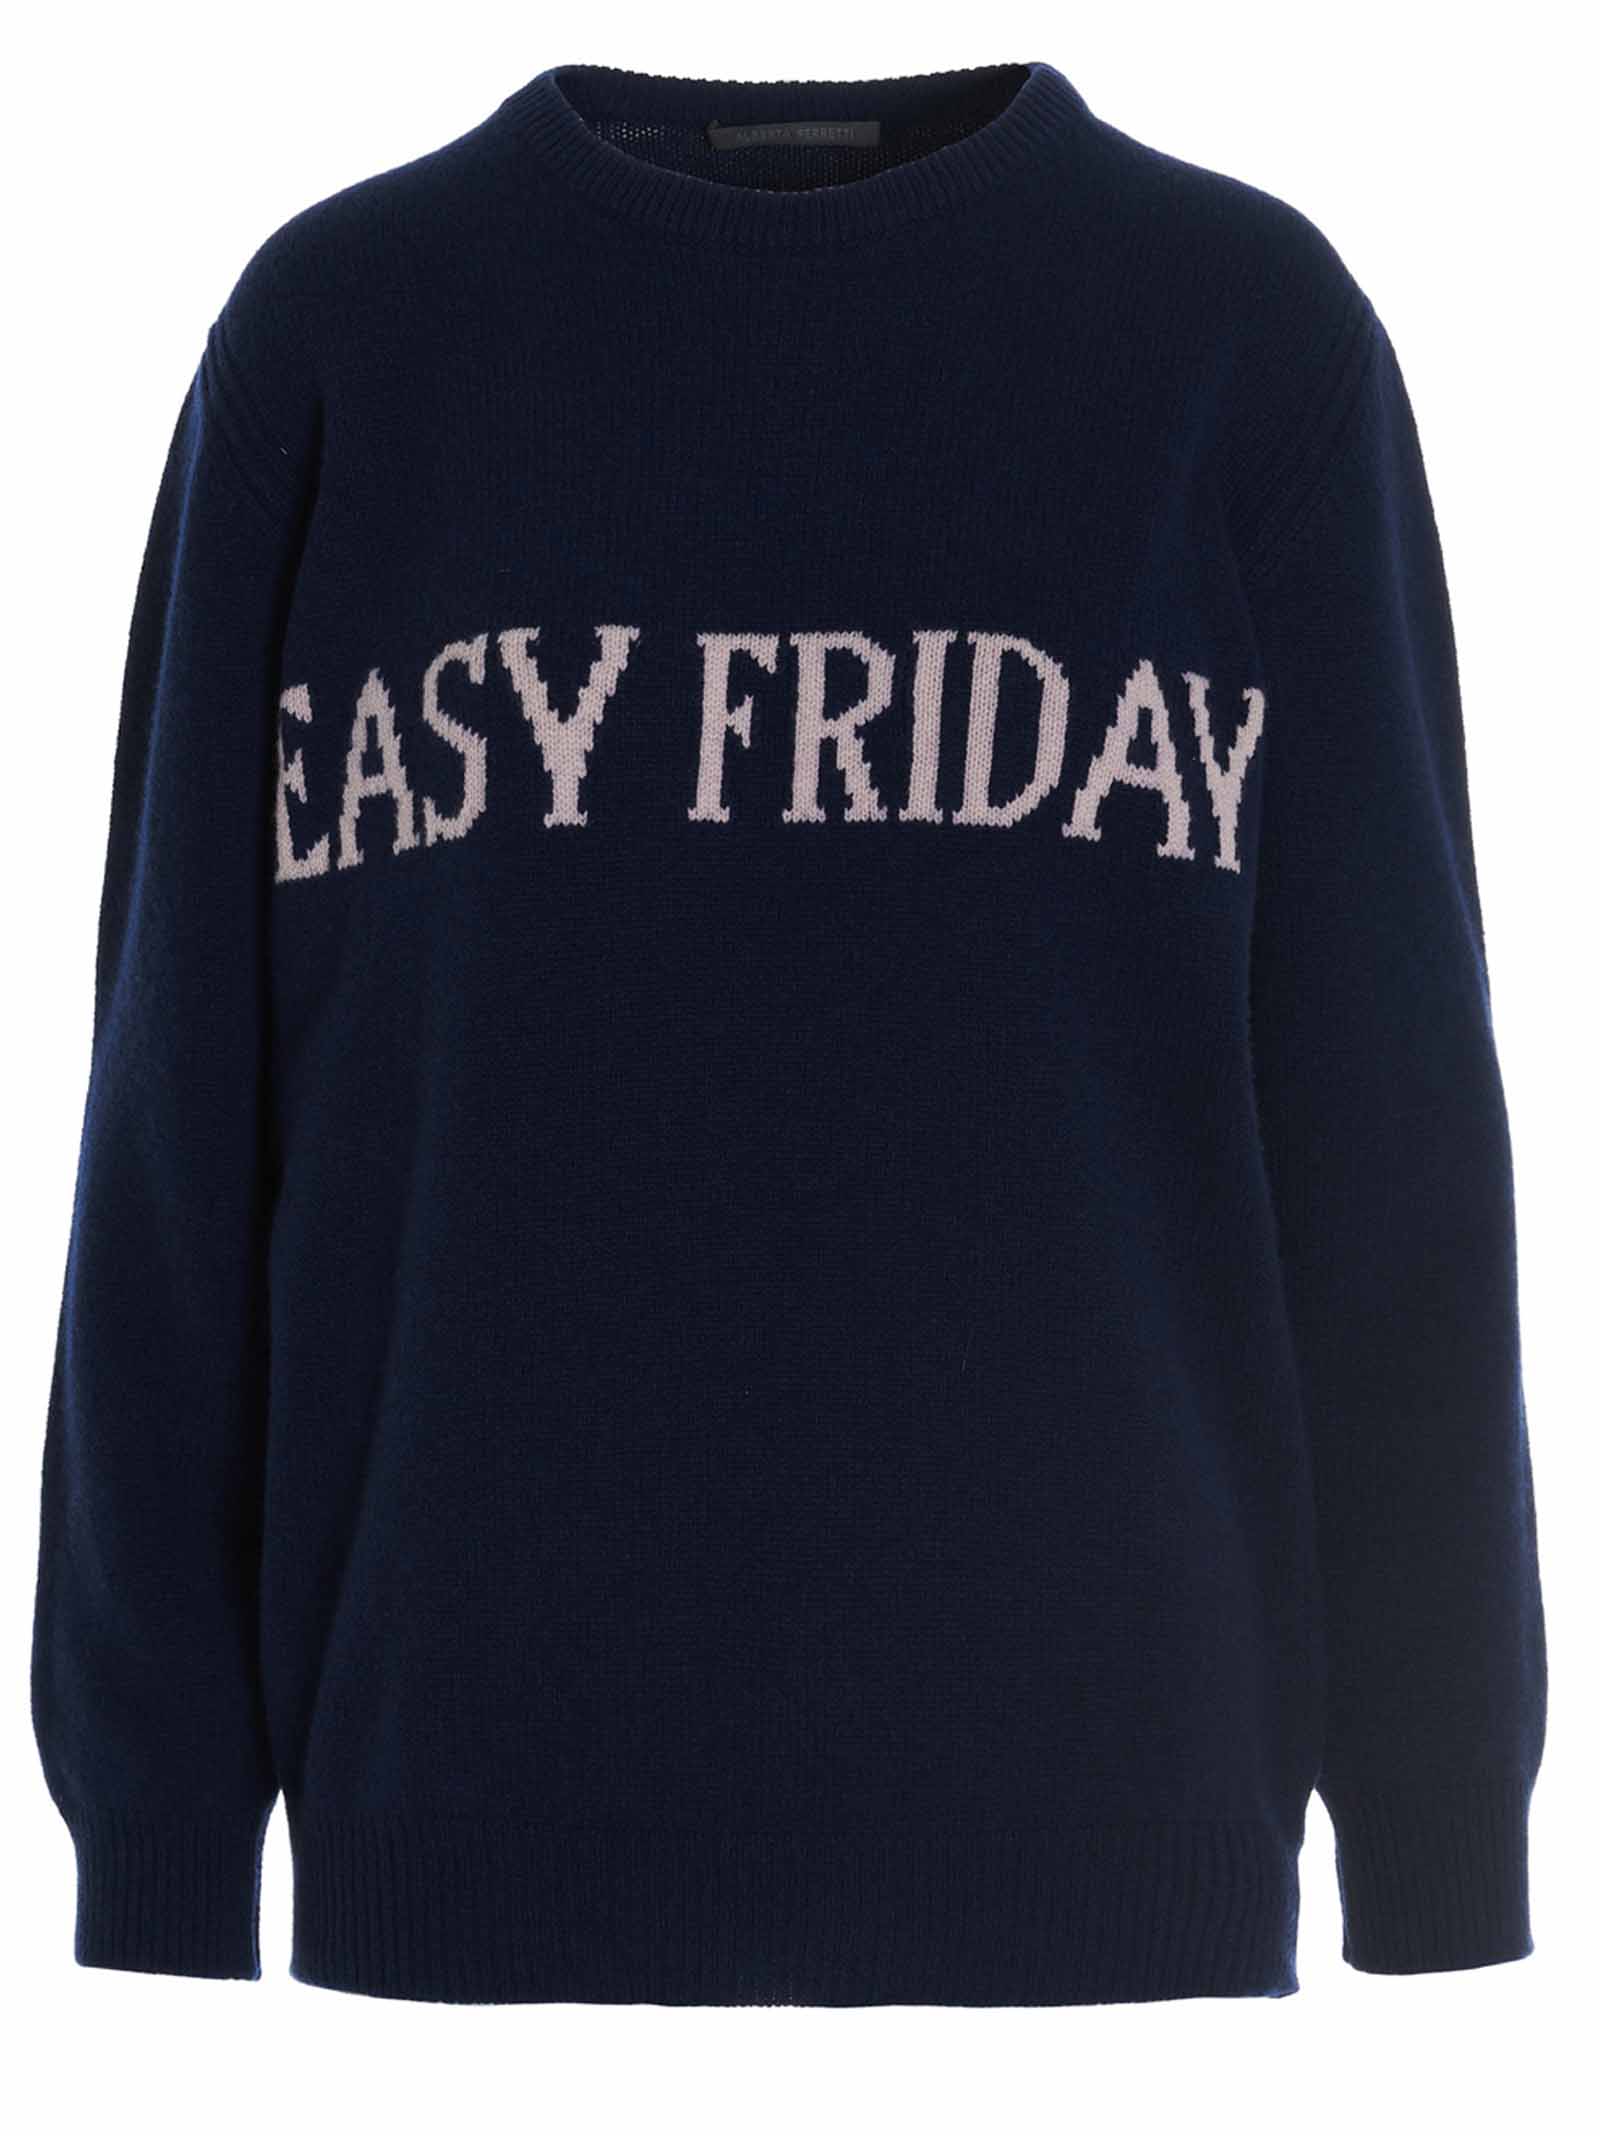 Alberta Ferretti easy Friday Sweater